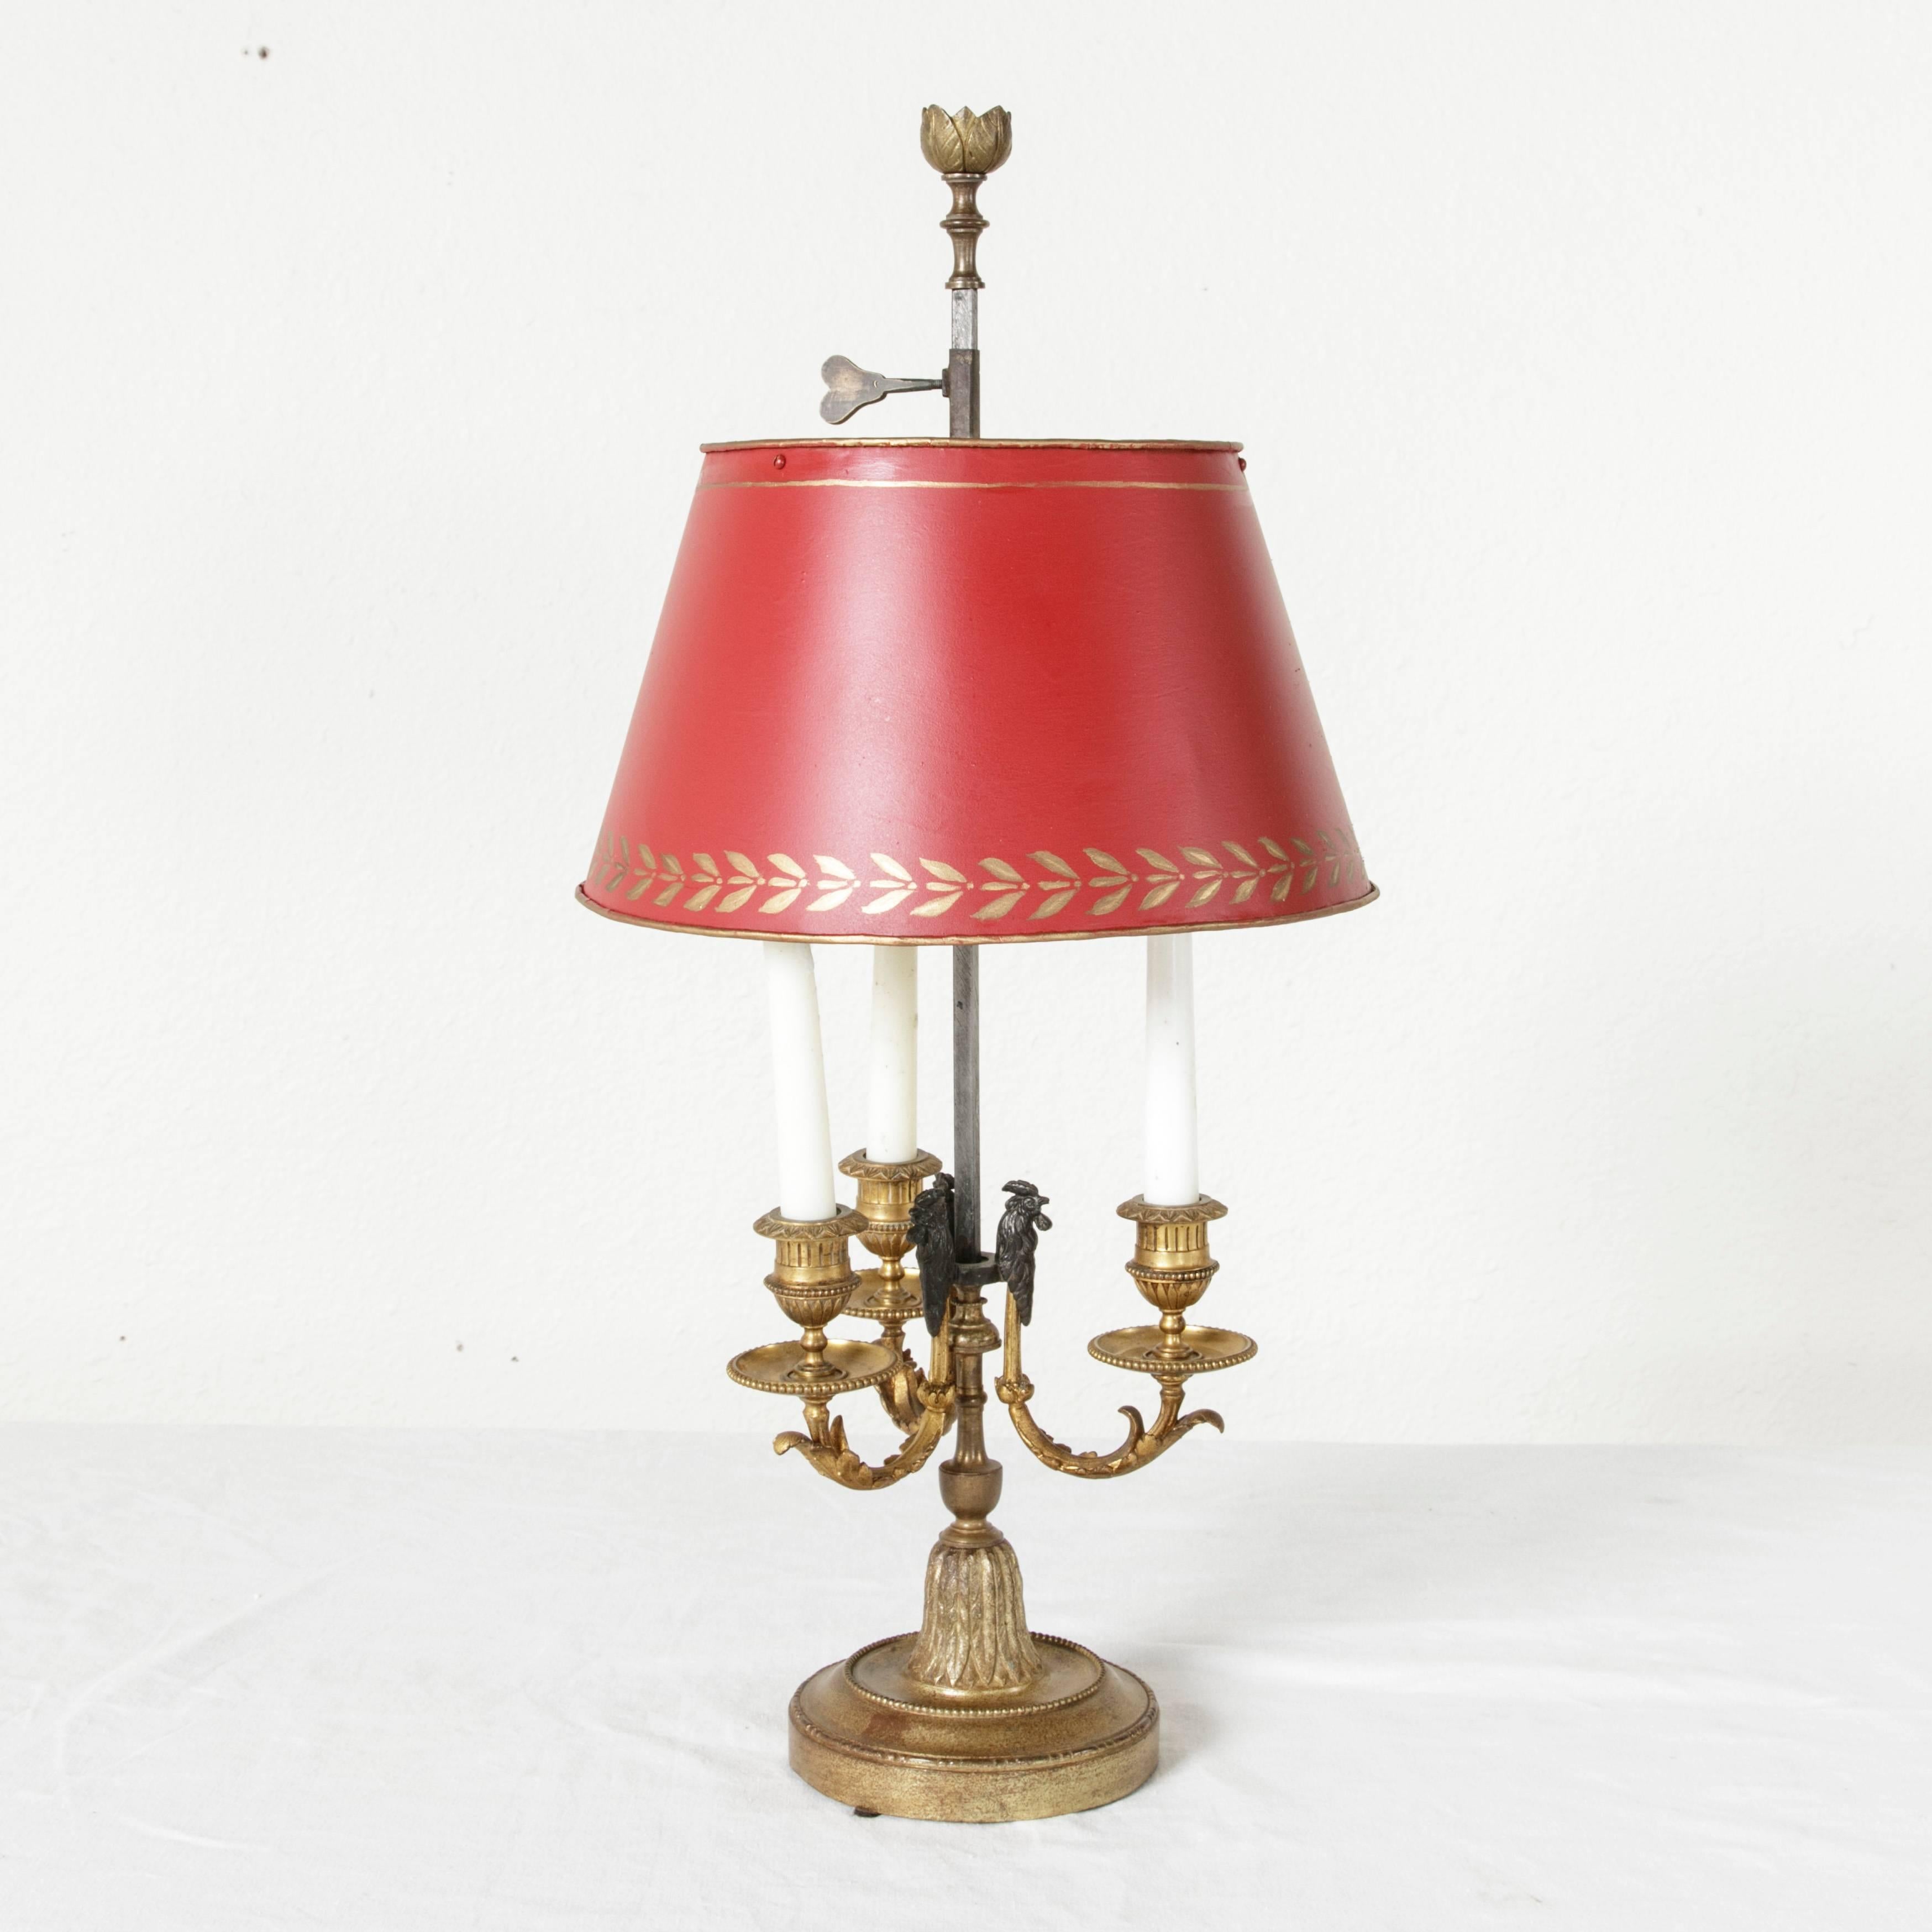 18th century lamps